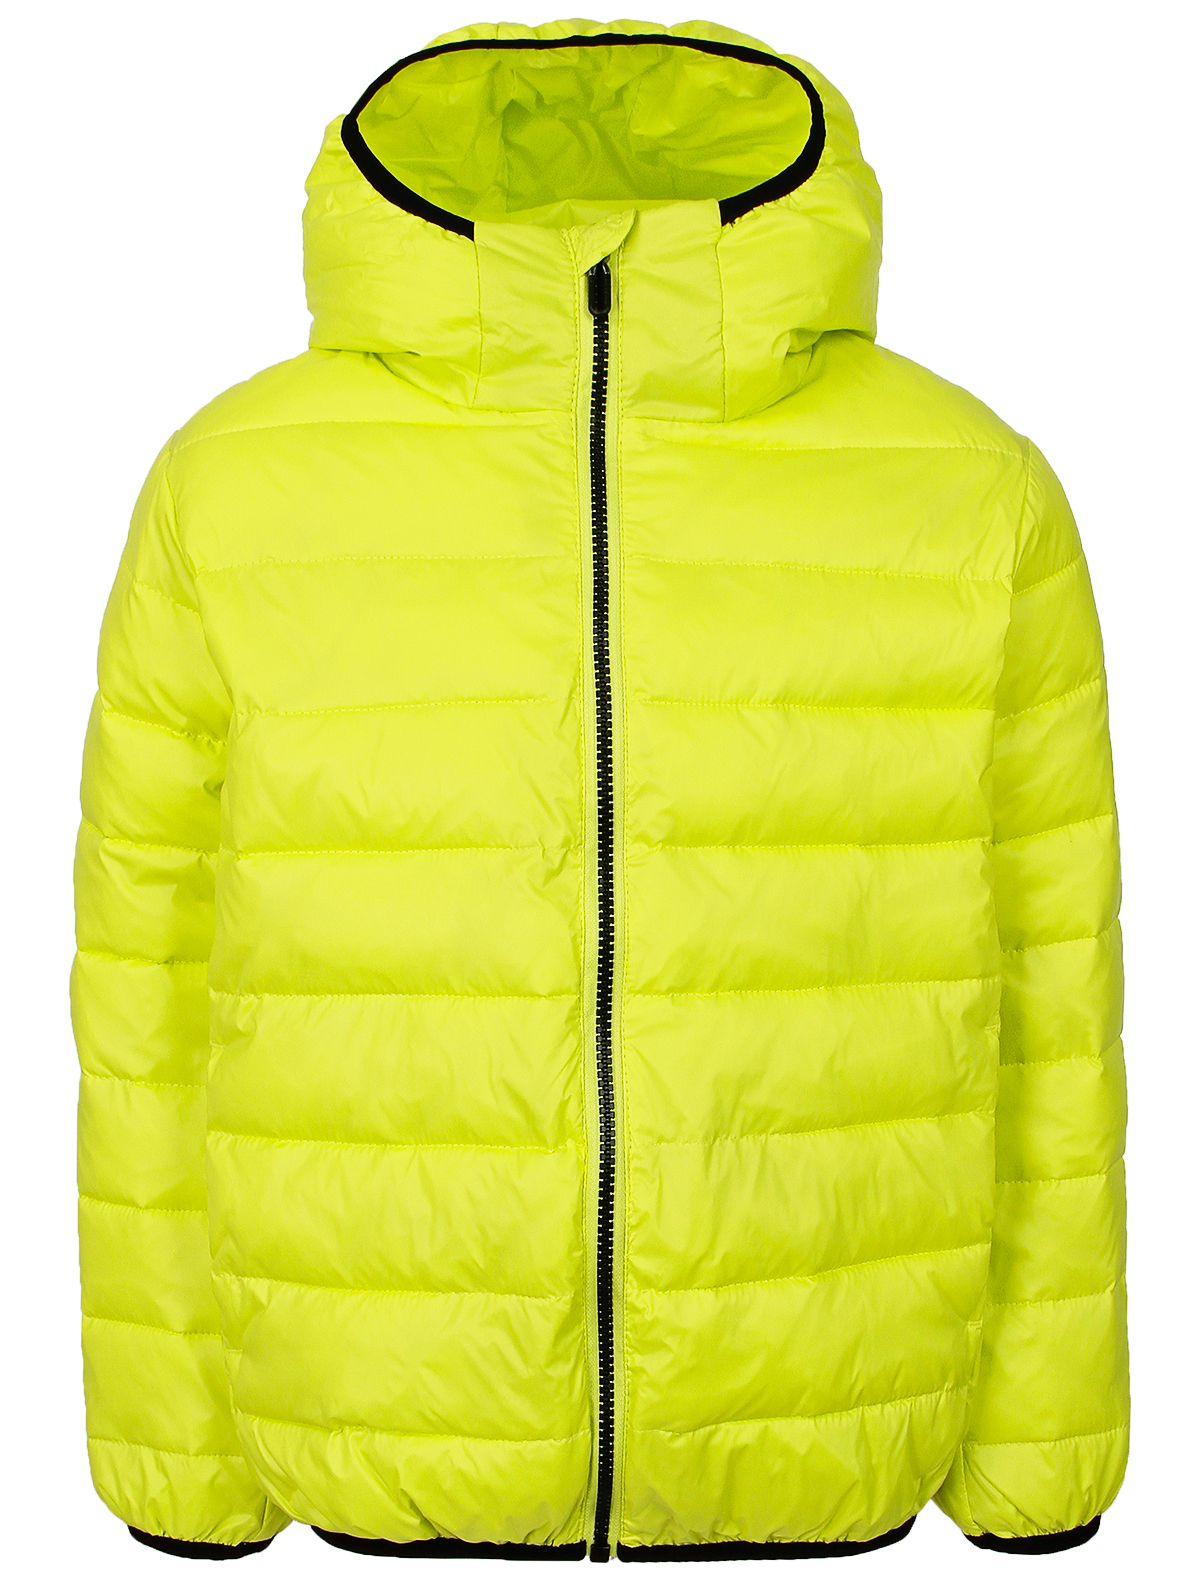 Куртка SILVER SPOON 2651332, цвет желтый, размер 7 1074519411267 - фото 1